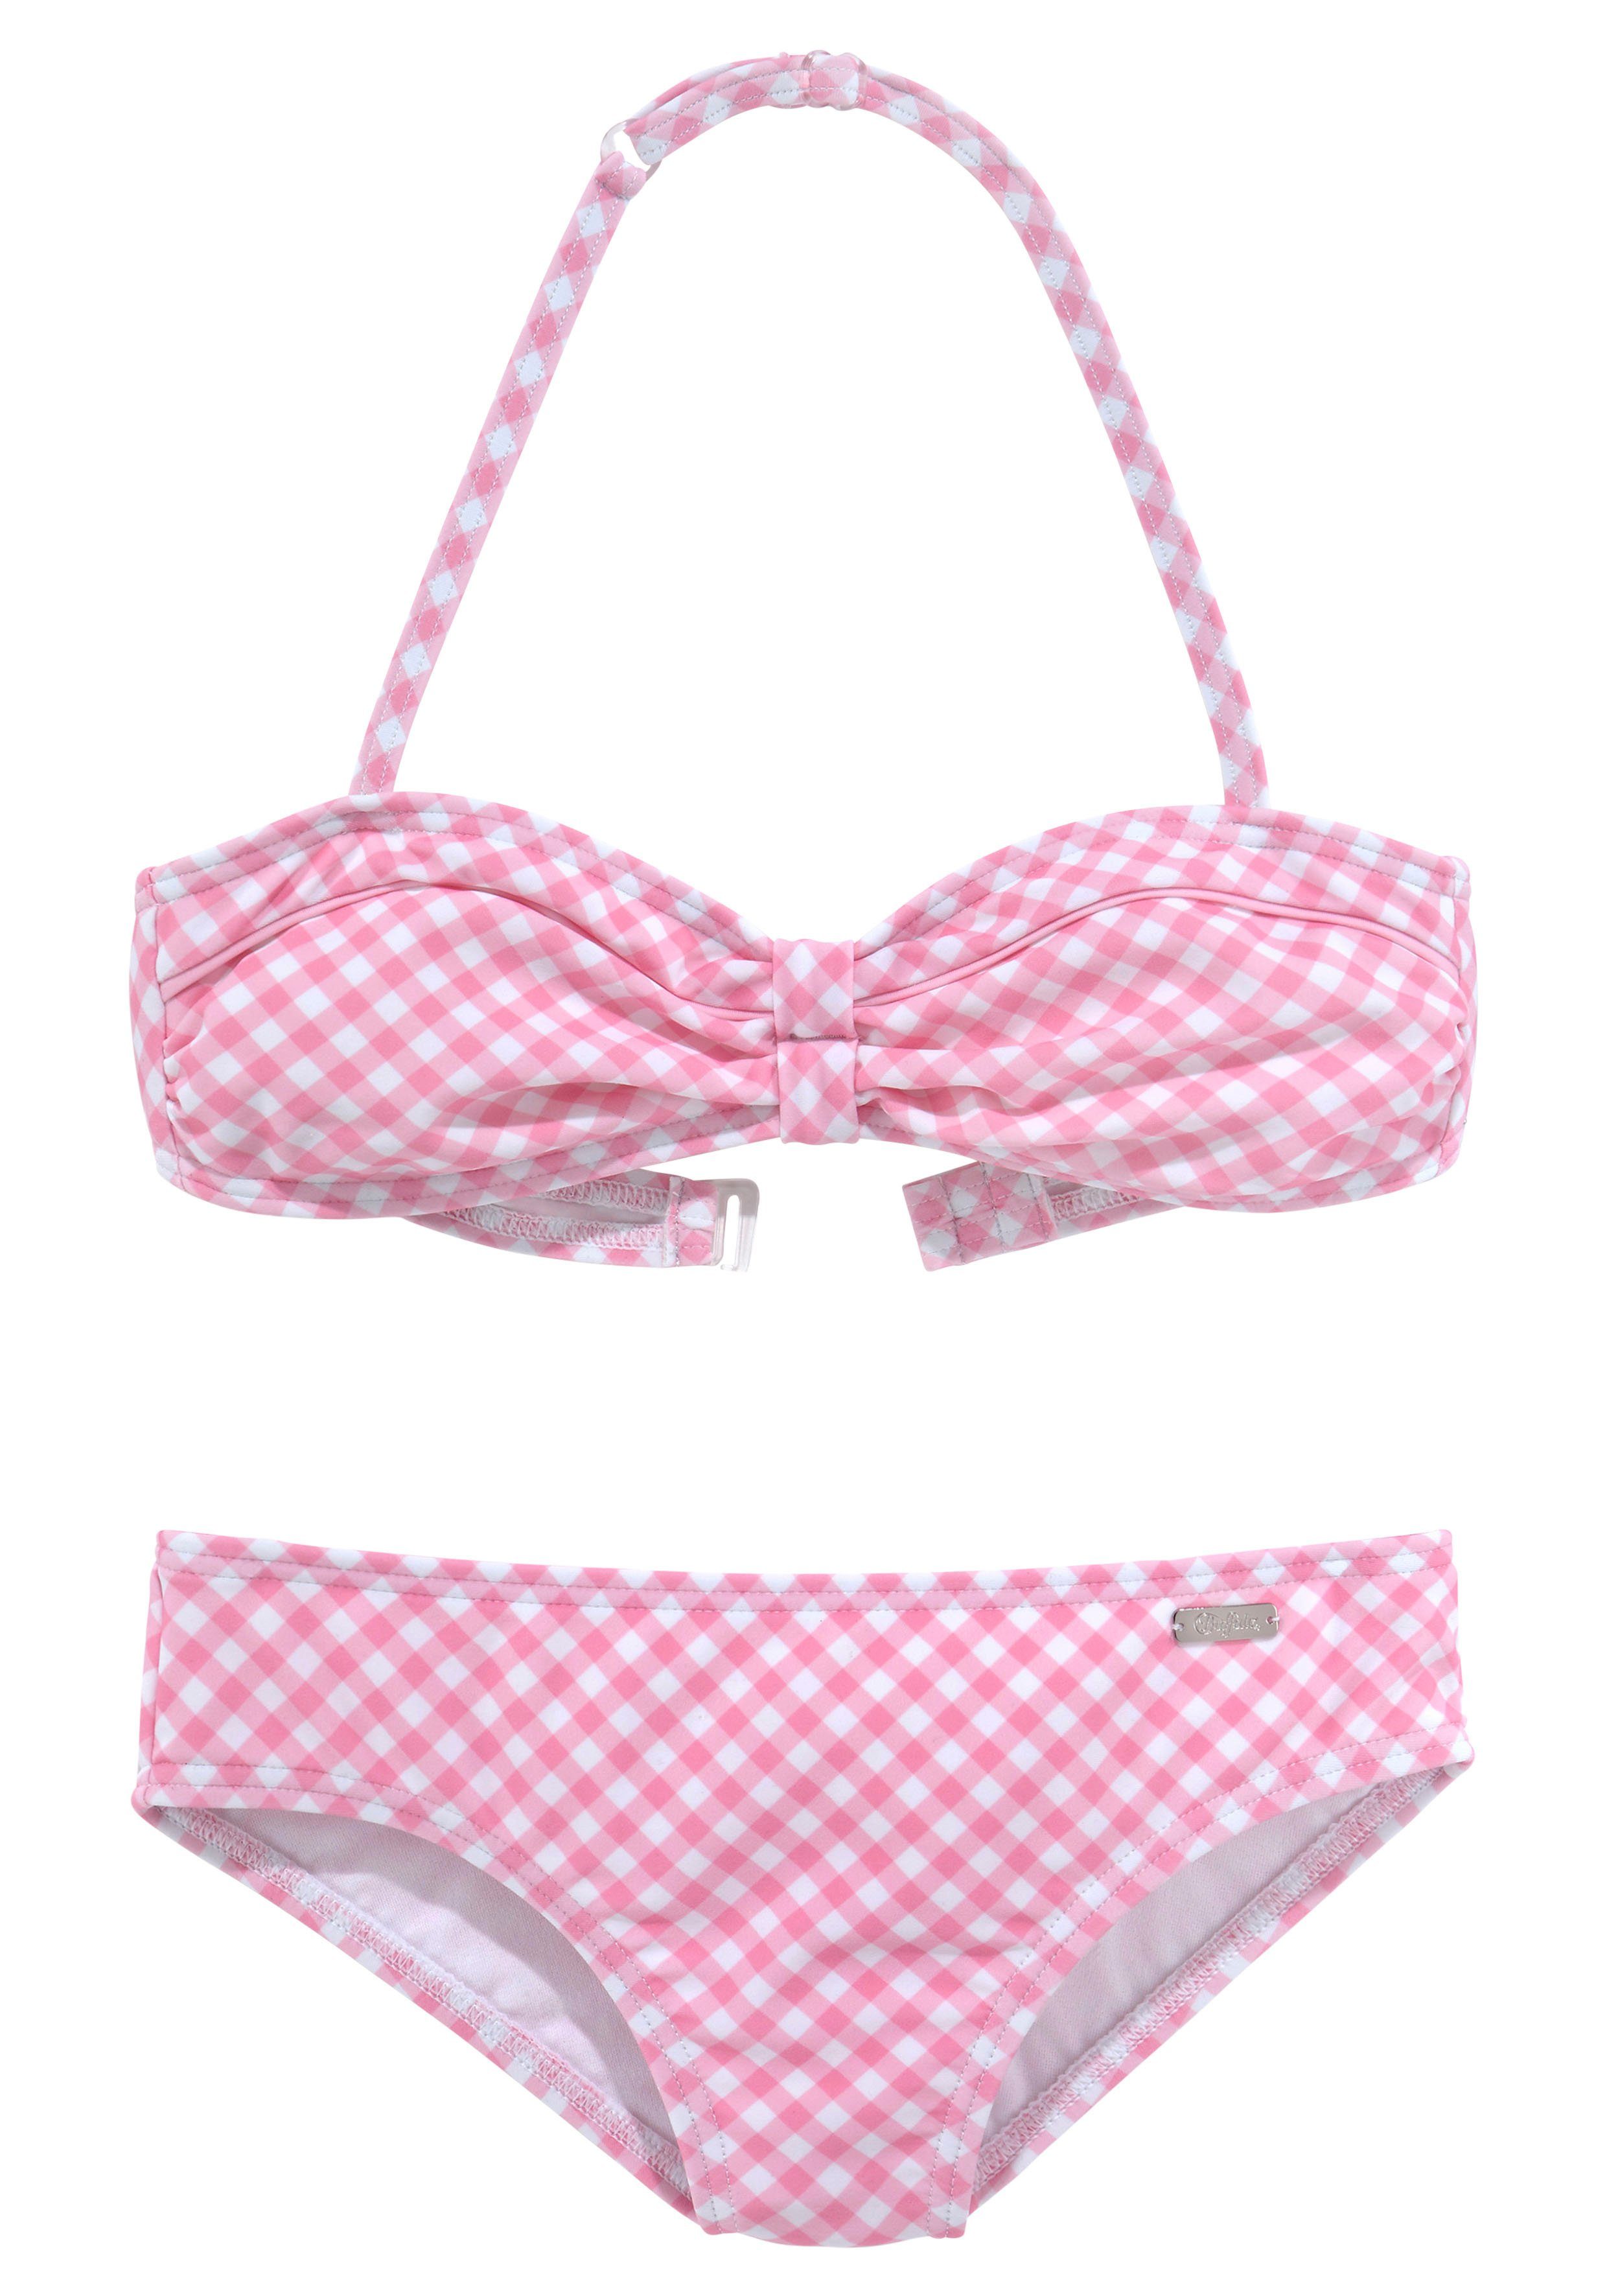 Buffalo Bandeau-Bikini Karo Kids mit unifarbenen Details rosa-weiß | Neckholder-Bikinis